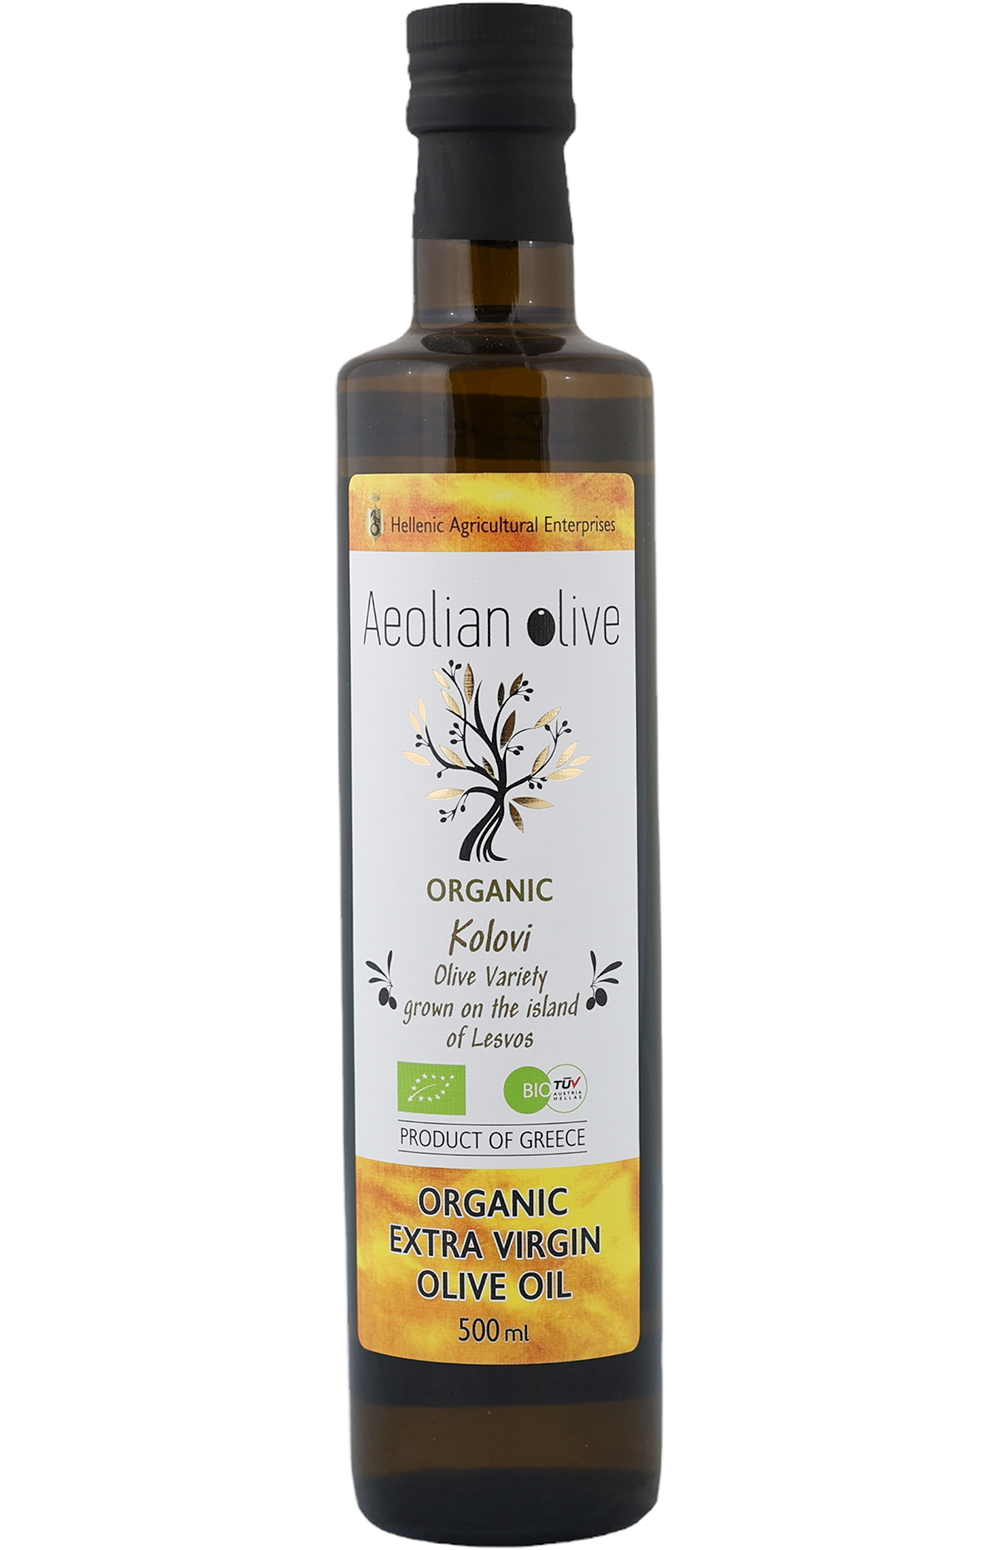 Aeolian Olive Organic Extra Virgin Olive Oil